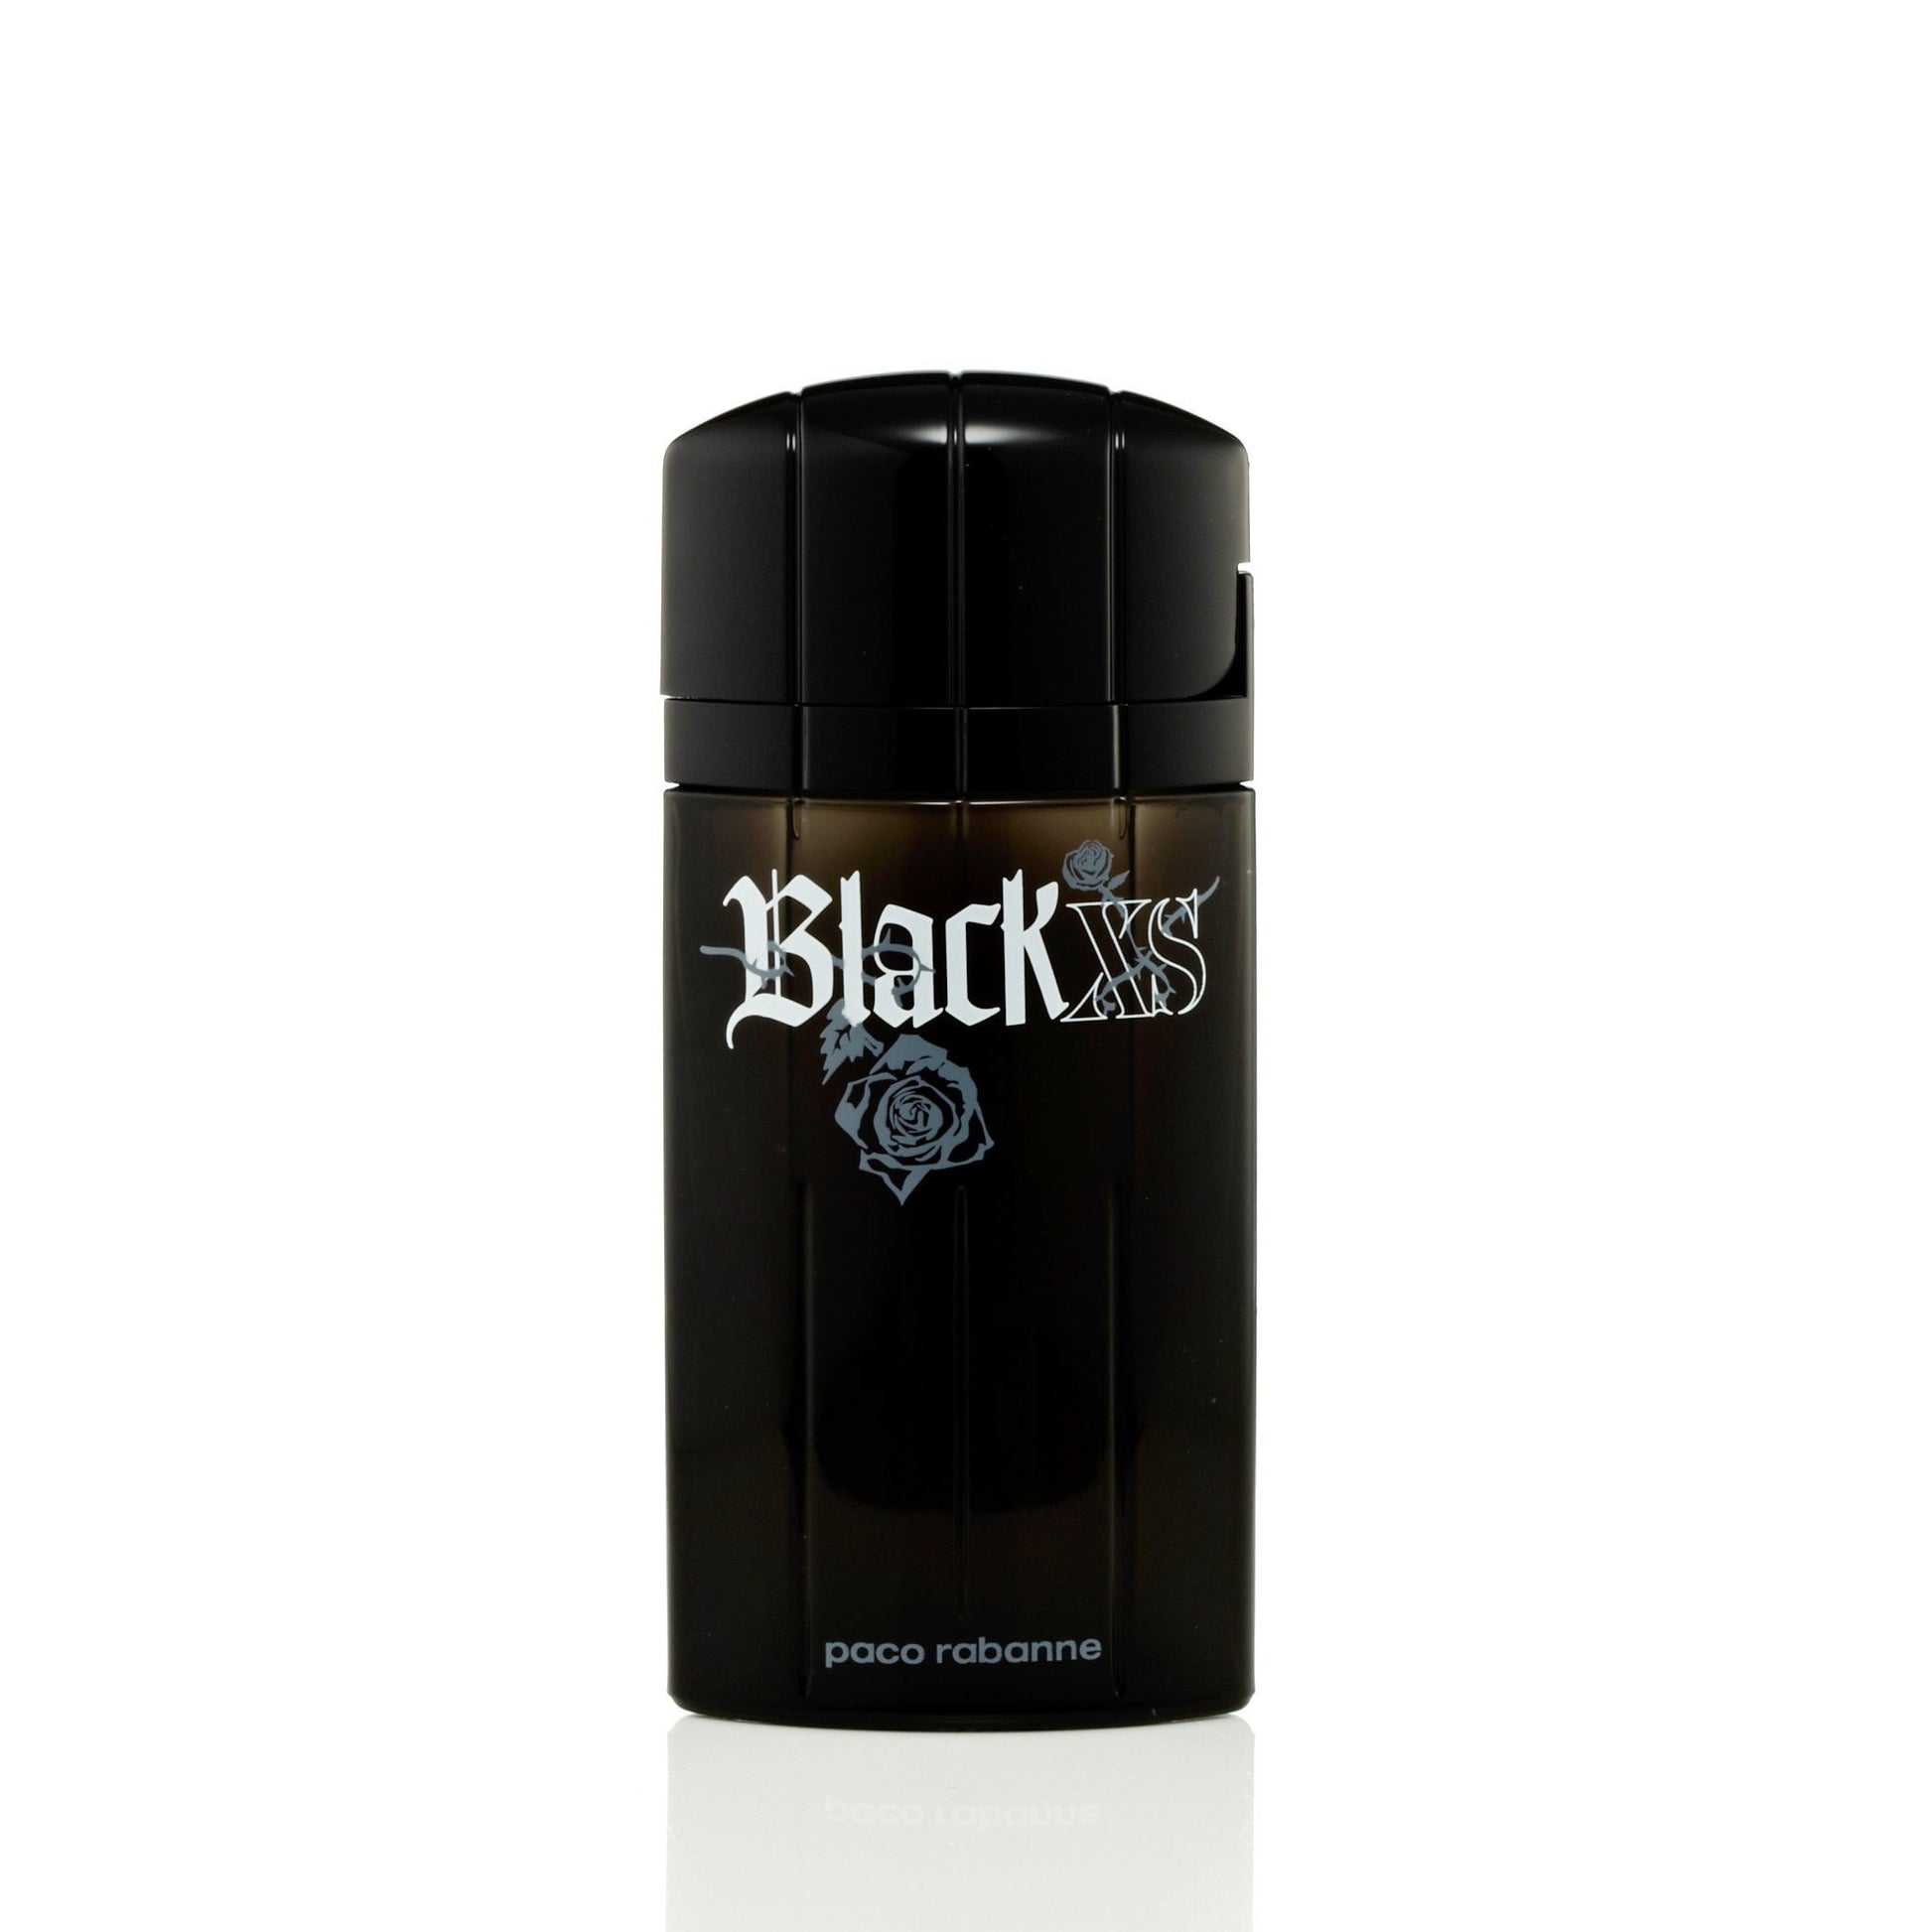 XS Black Eau de Toilette Spray for Men by Paco Rabanne 3.4 oz. Click to open in modal